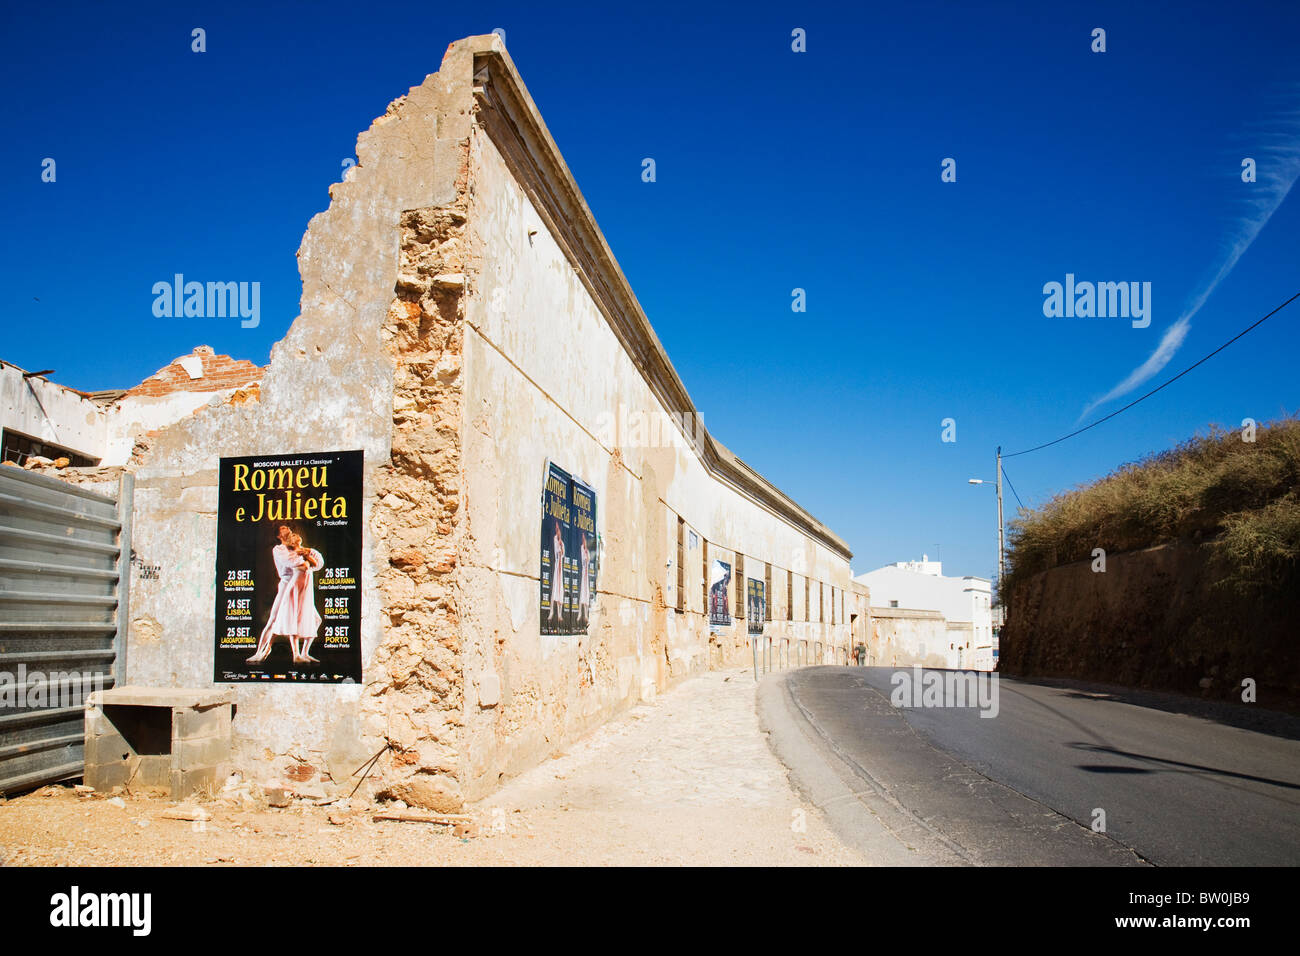 "Romeo & Julia" Plakate auf eine alte verfallene Mauer in Portimao, Algarve, Portugal. Stockfoto